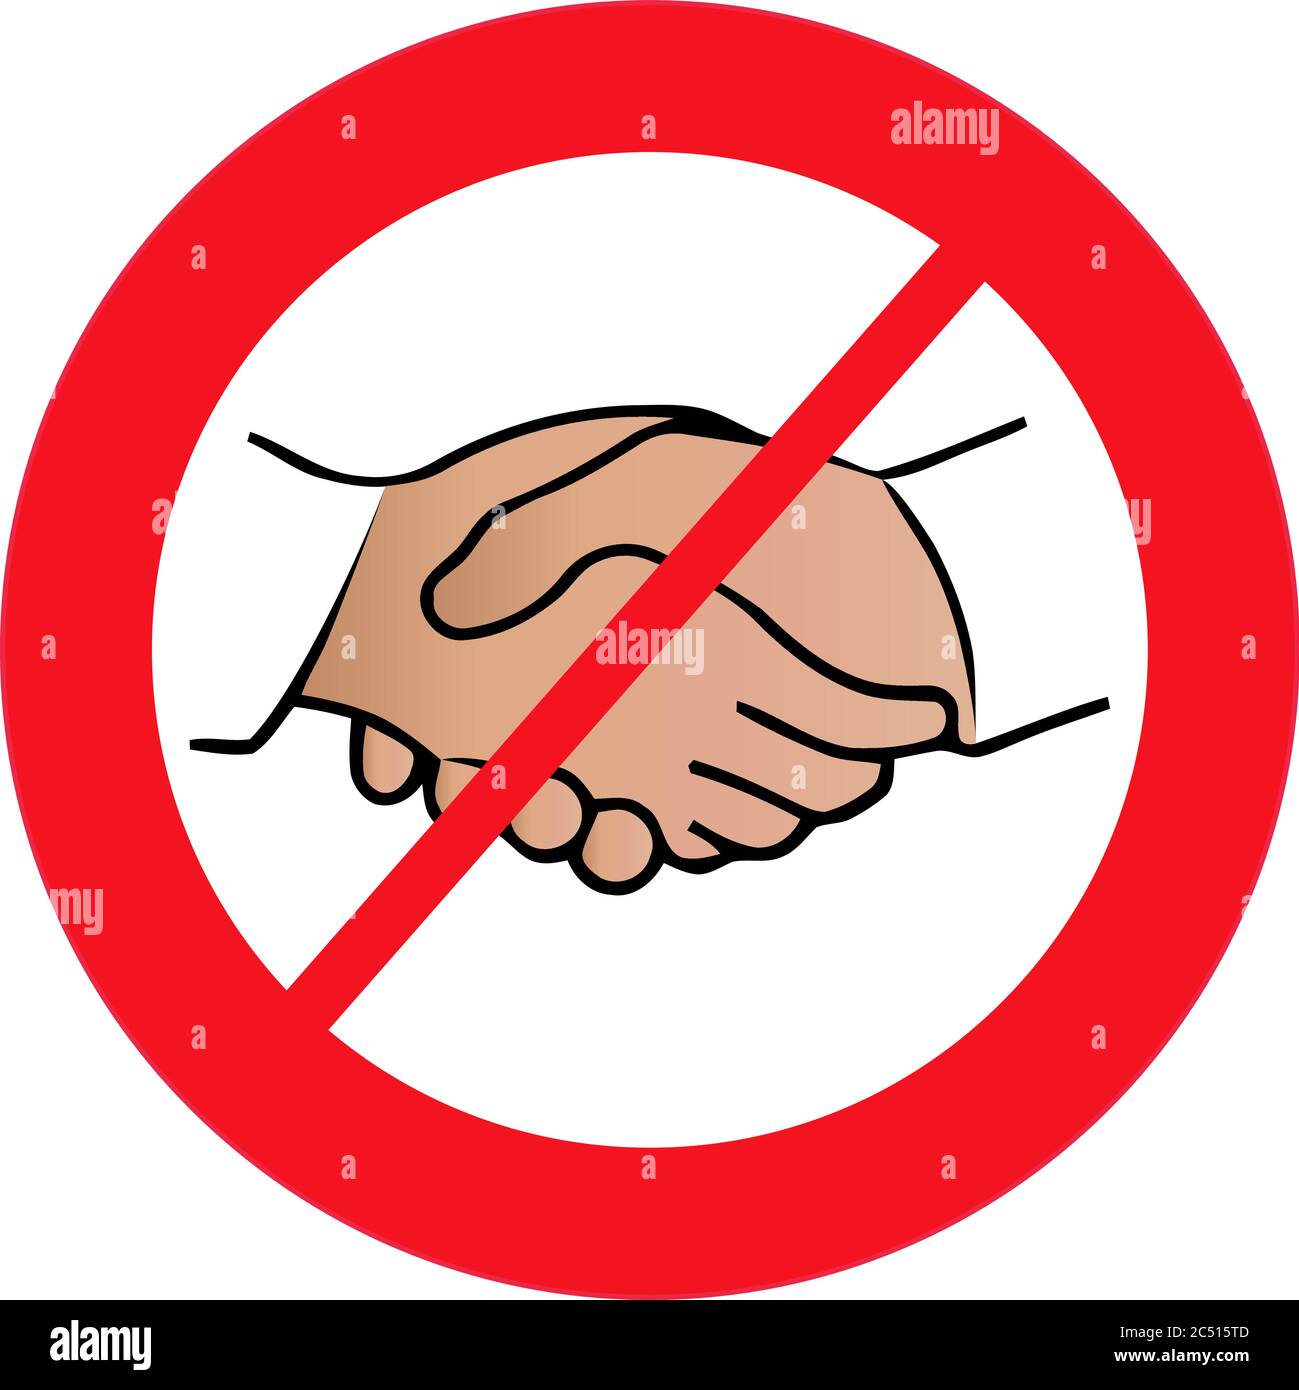 No handshake icon with red forbidden sign, avoiding physical contact and coronavirus infection. Forbidden handshake symbol concept. Vector illustratio Stock Vector